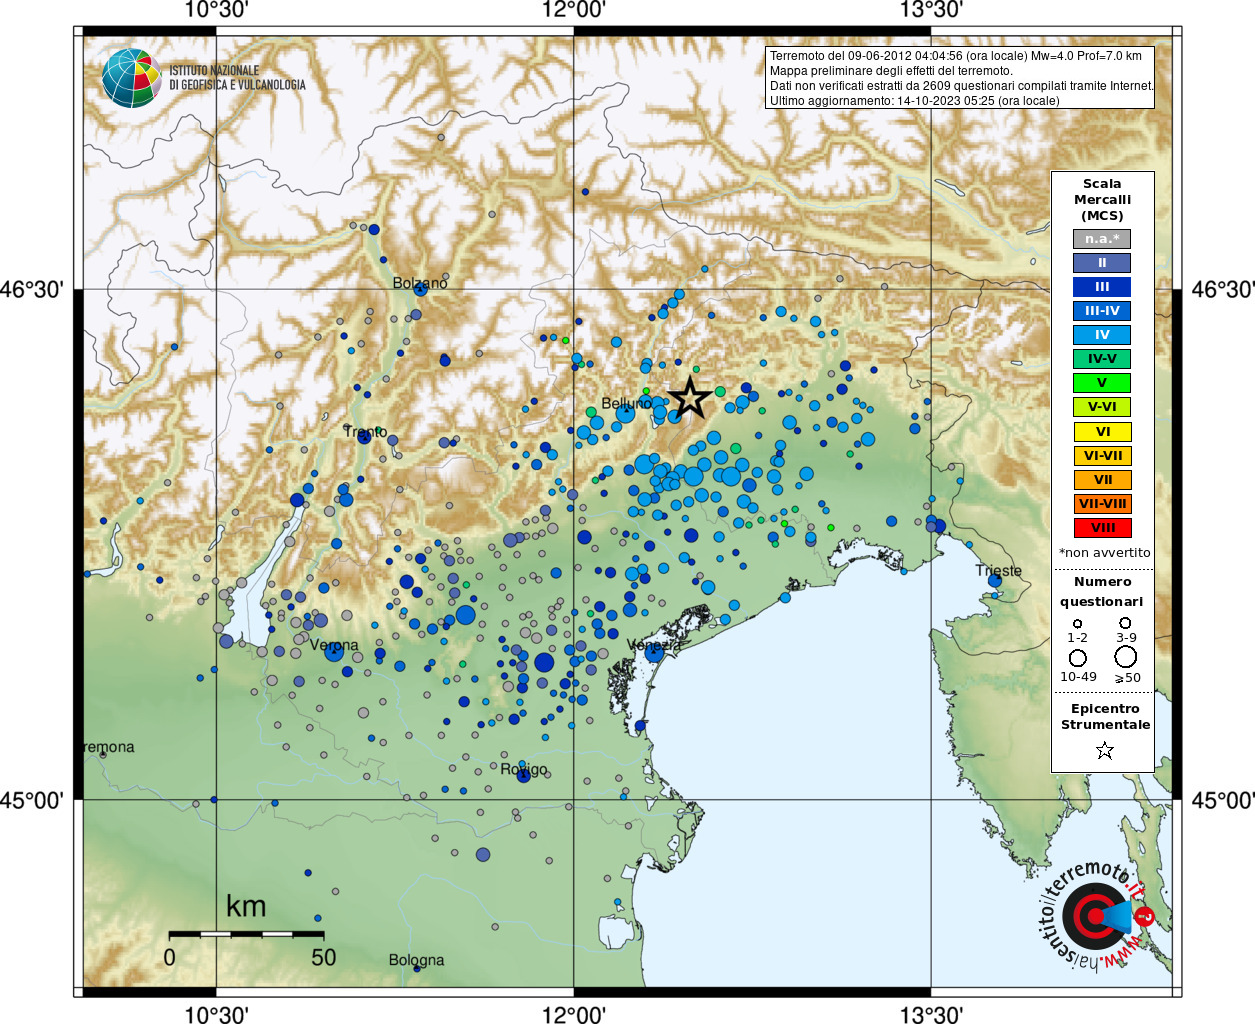 Earthquake 6 km W Barcis (PN), Magnitude Mw 4.0, 9 June 2012 time 04:04:56 (Timezone ...1251 x 1024